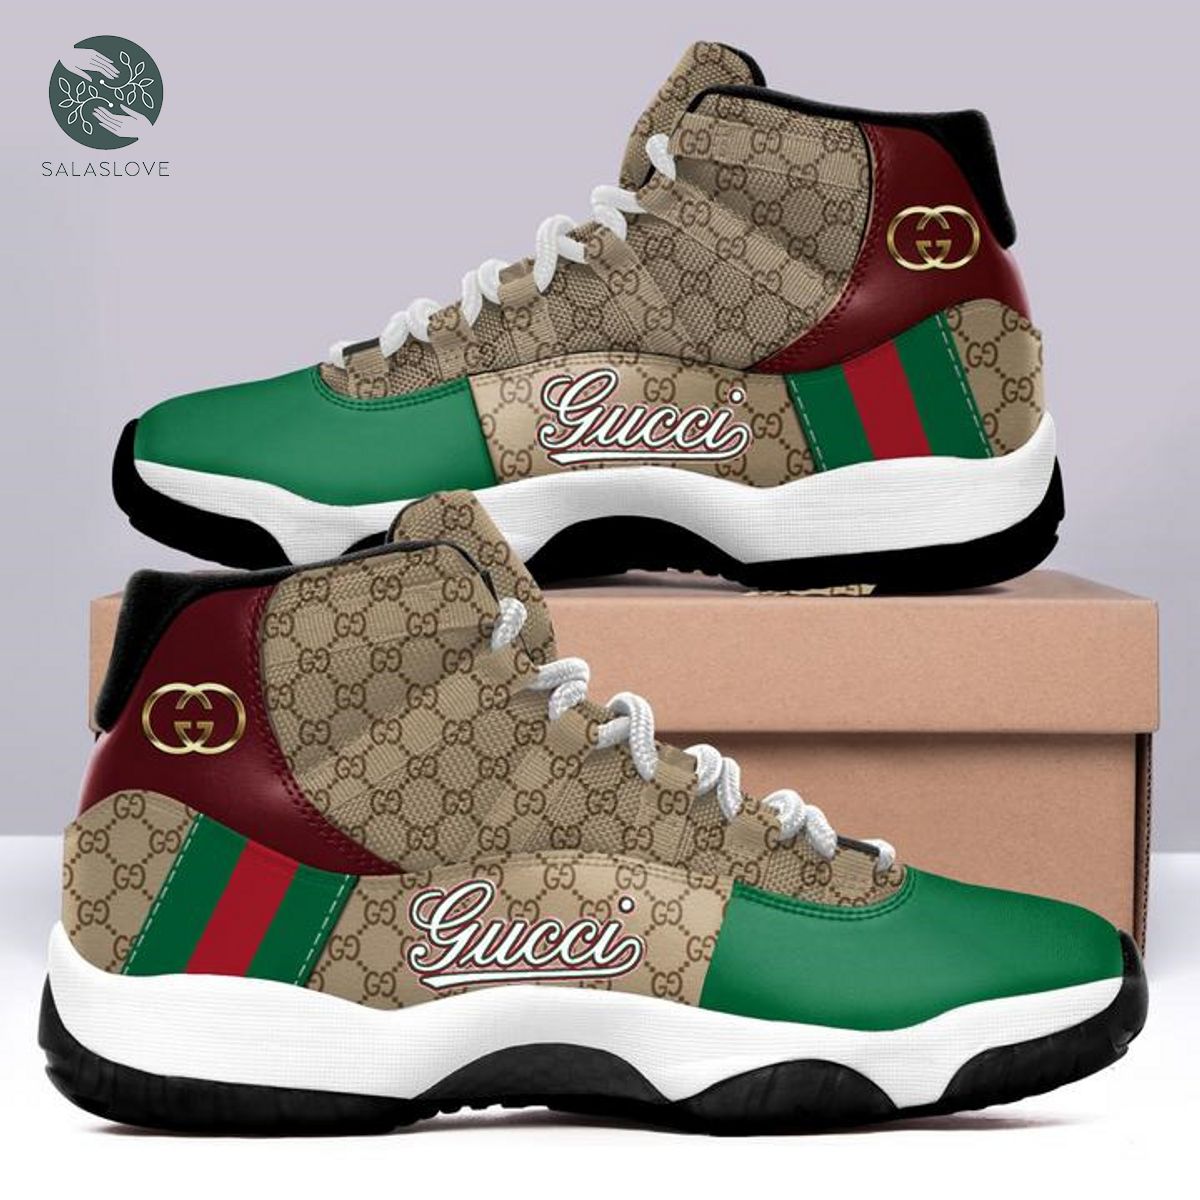 Gucci Air Jordan 11 Gift For Gucci Fans

